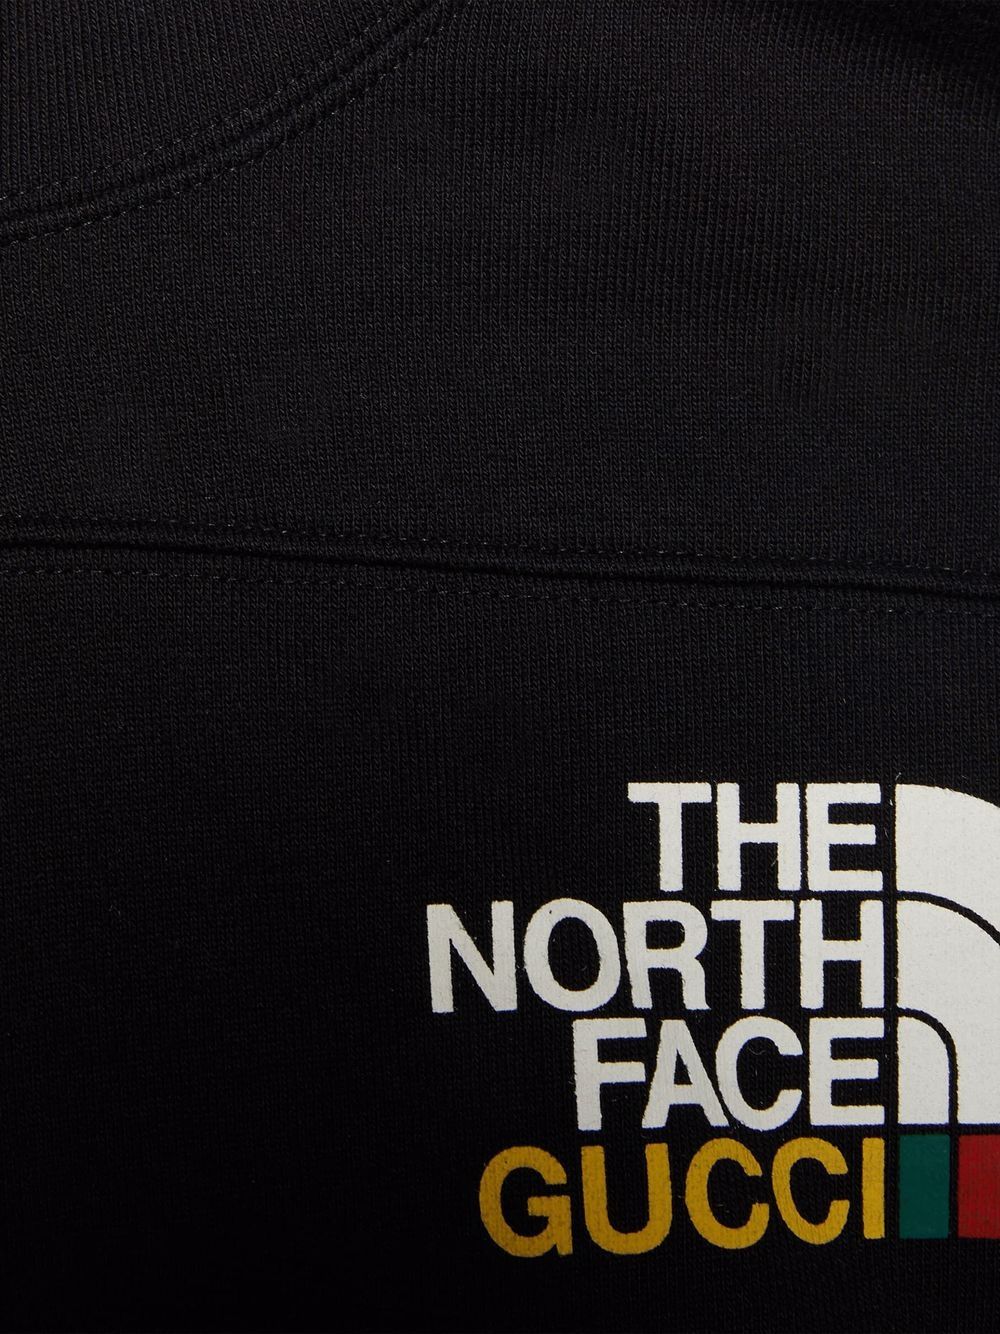 Gucci x The North Face Jacket - Farfetch